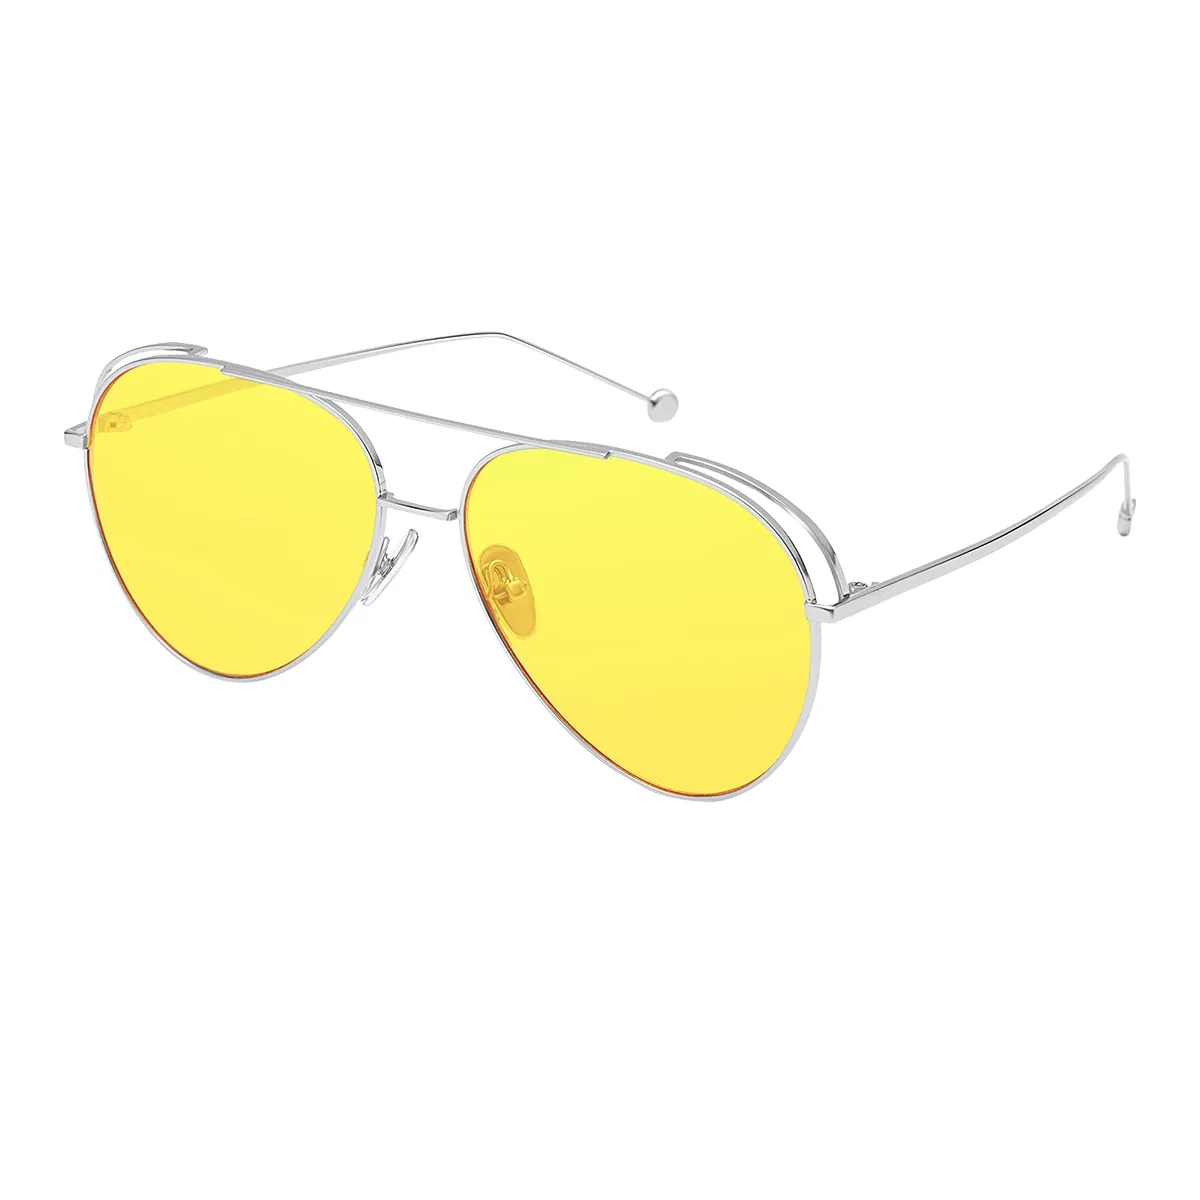 Agars - Aviator Silver/1 Sunglasses for Women